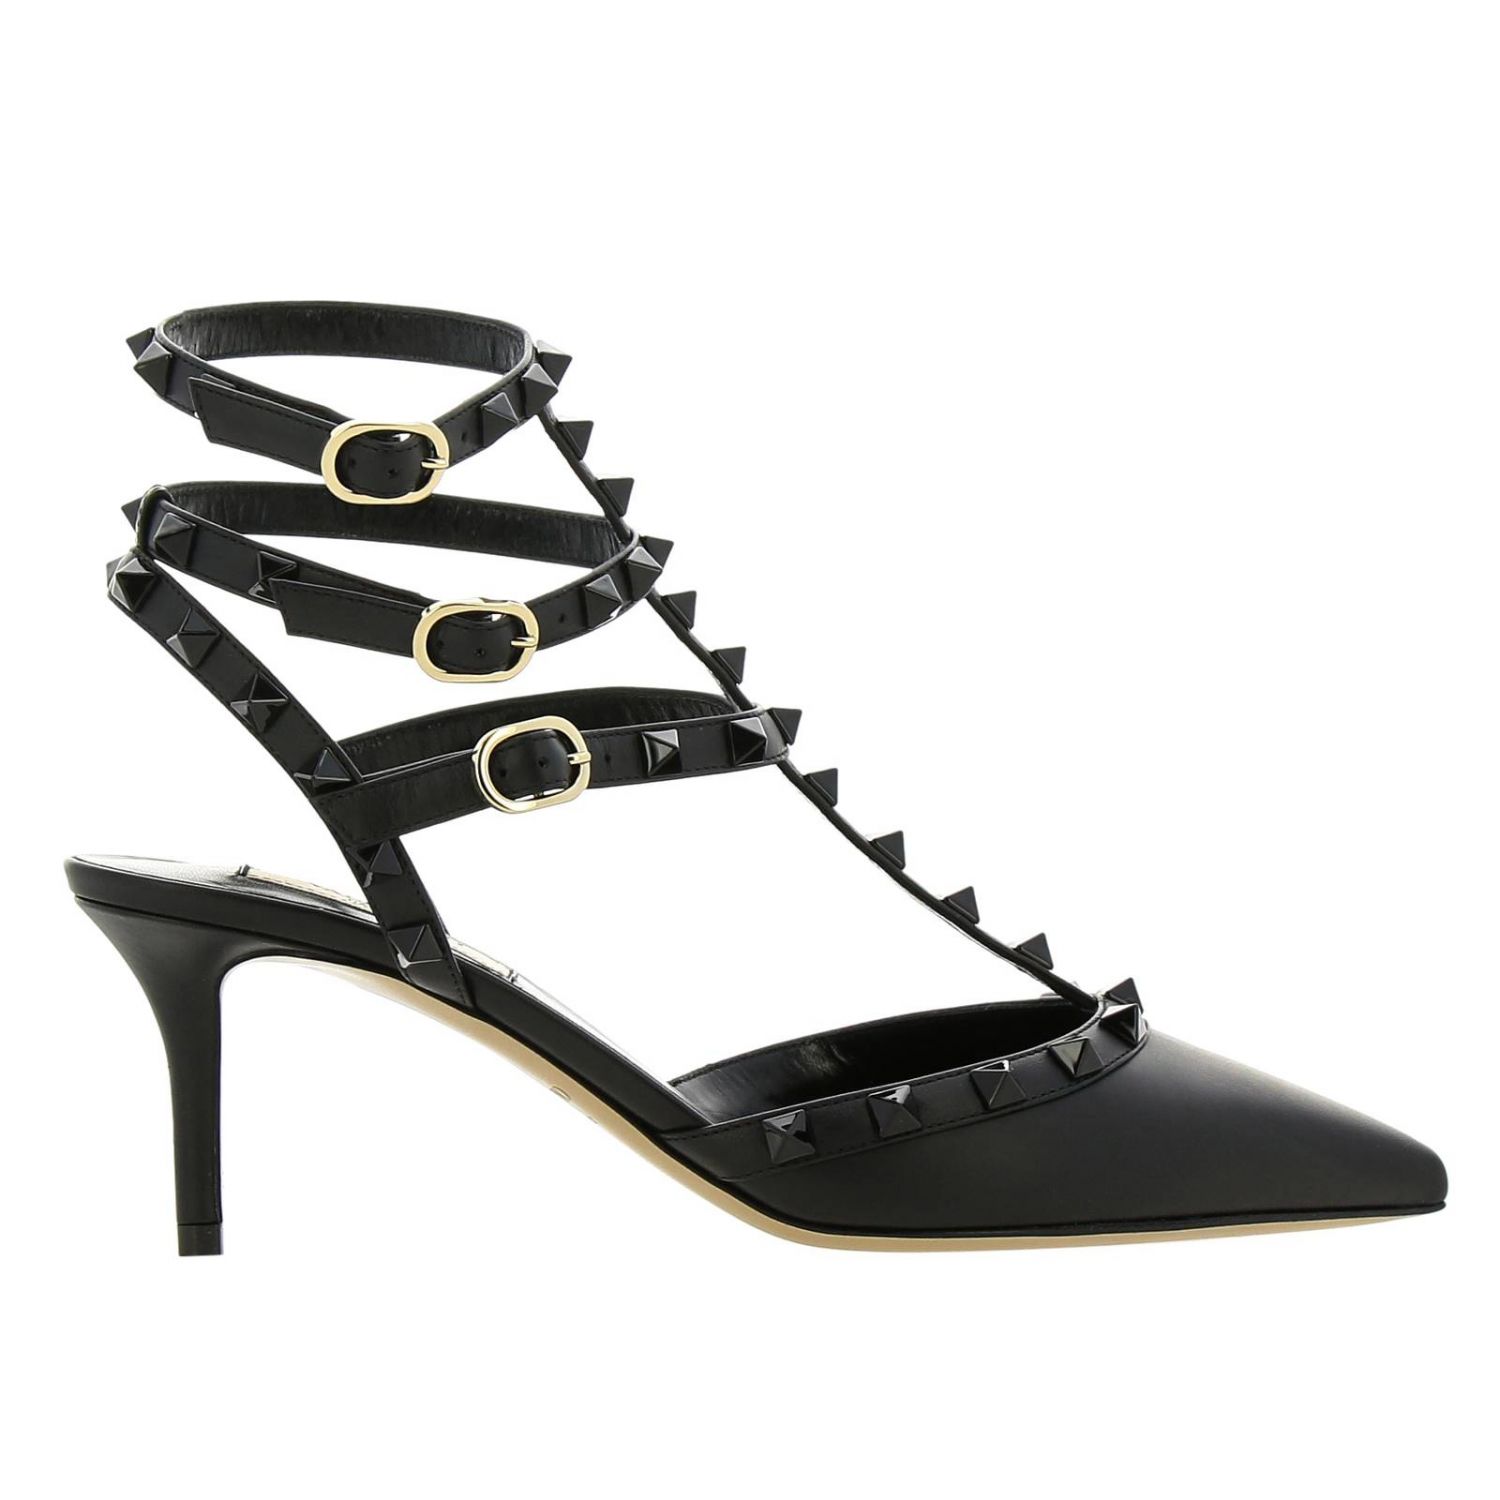 VALENTINO GARAVANI: Shoes women | Pumps Valentino Garavani Women Black ...